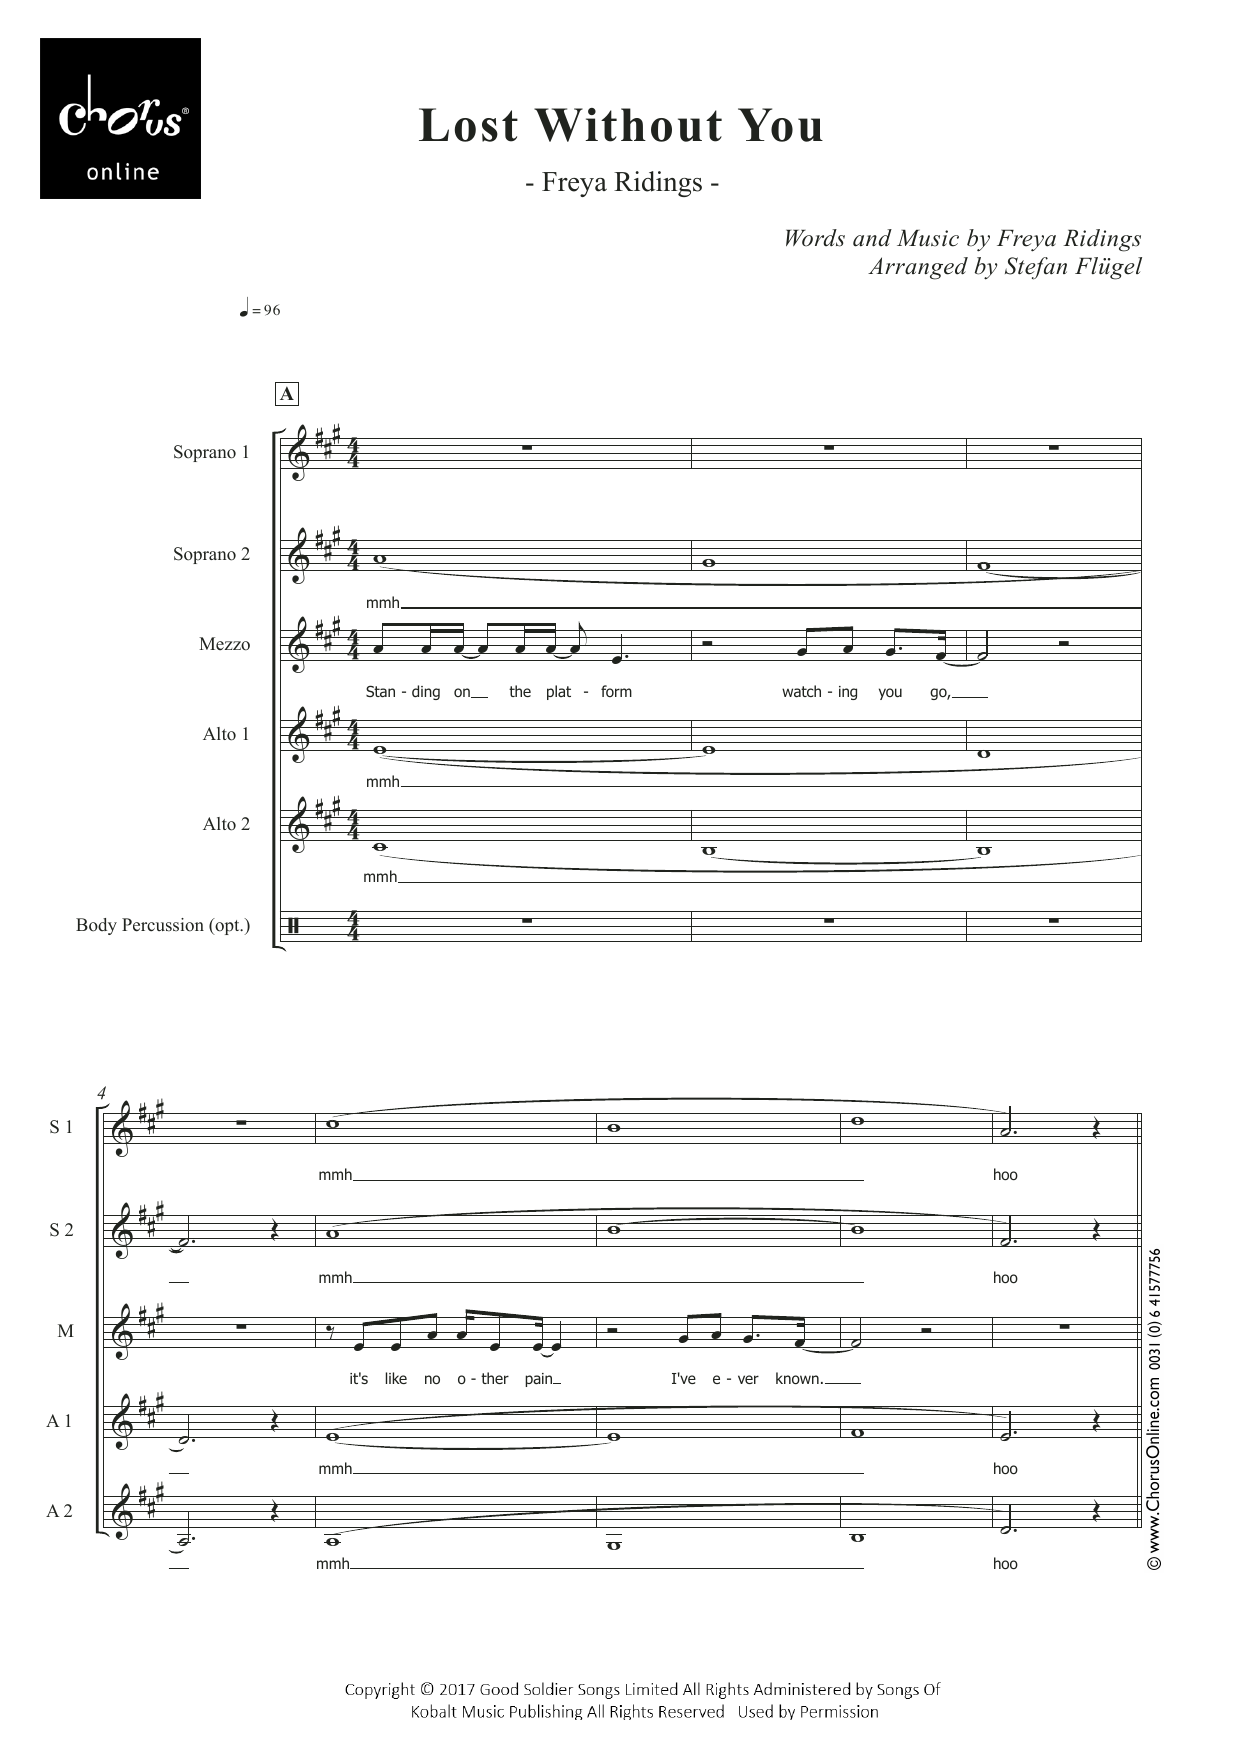 Freya Ridings Lost Without You (arr. Stefan Flügel) sheet music notes printable PDF score